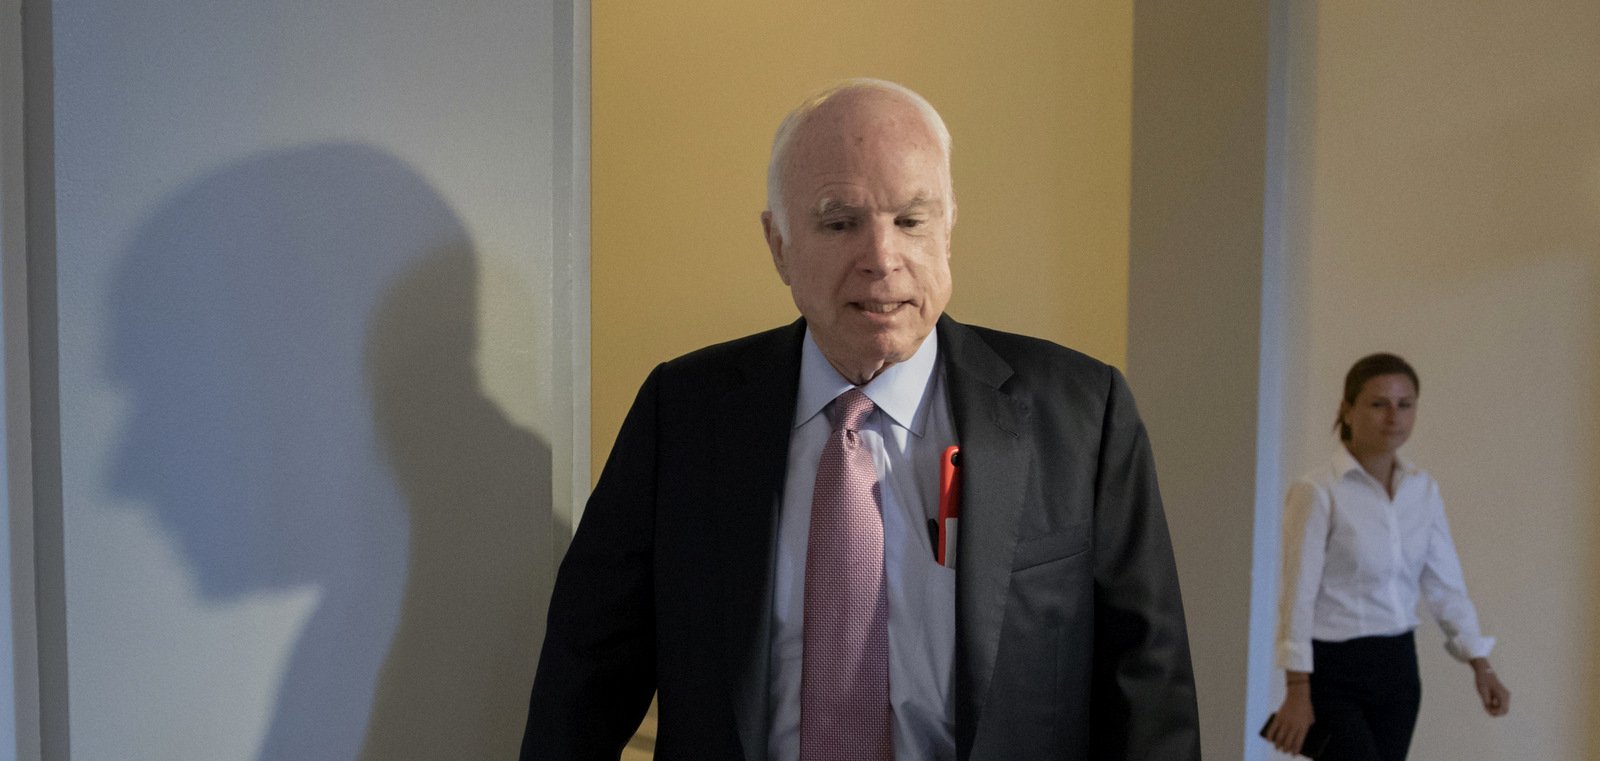 Sen. John McCain, R-Ariz., walks from his Senate office as Congress returns from the August recess in Washington,, Sept. 5, 2017. (AP/J. Scott Applewhite)